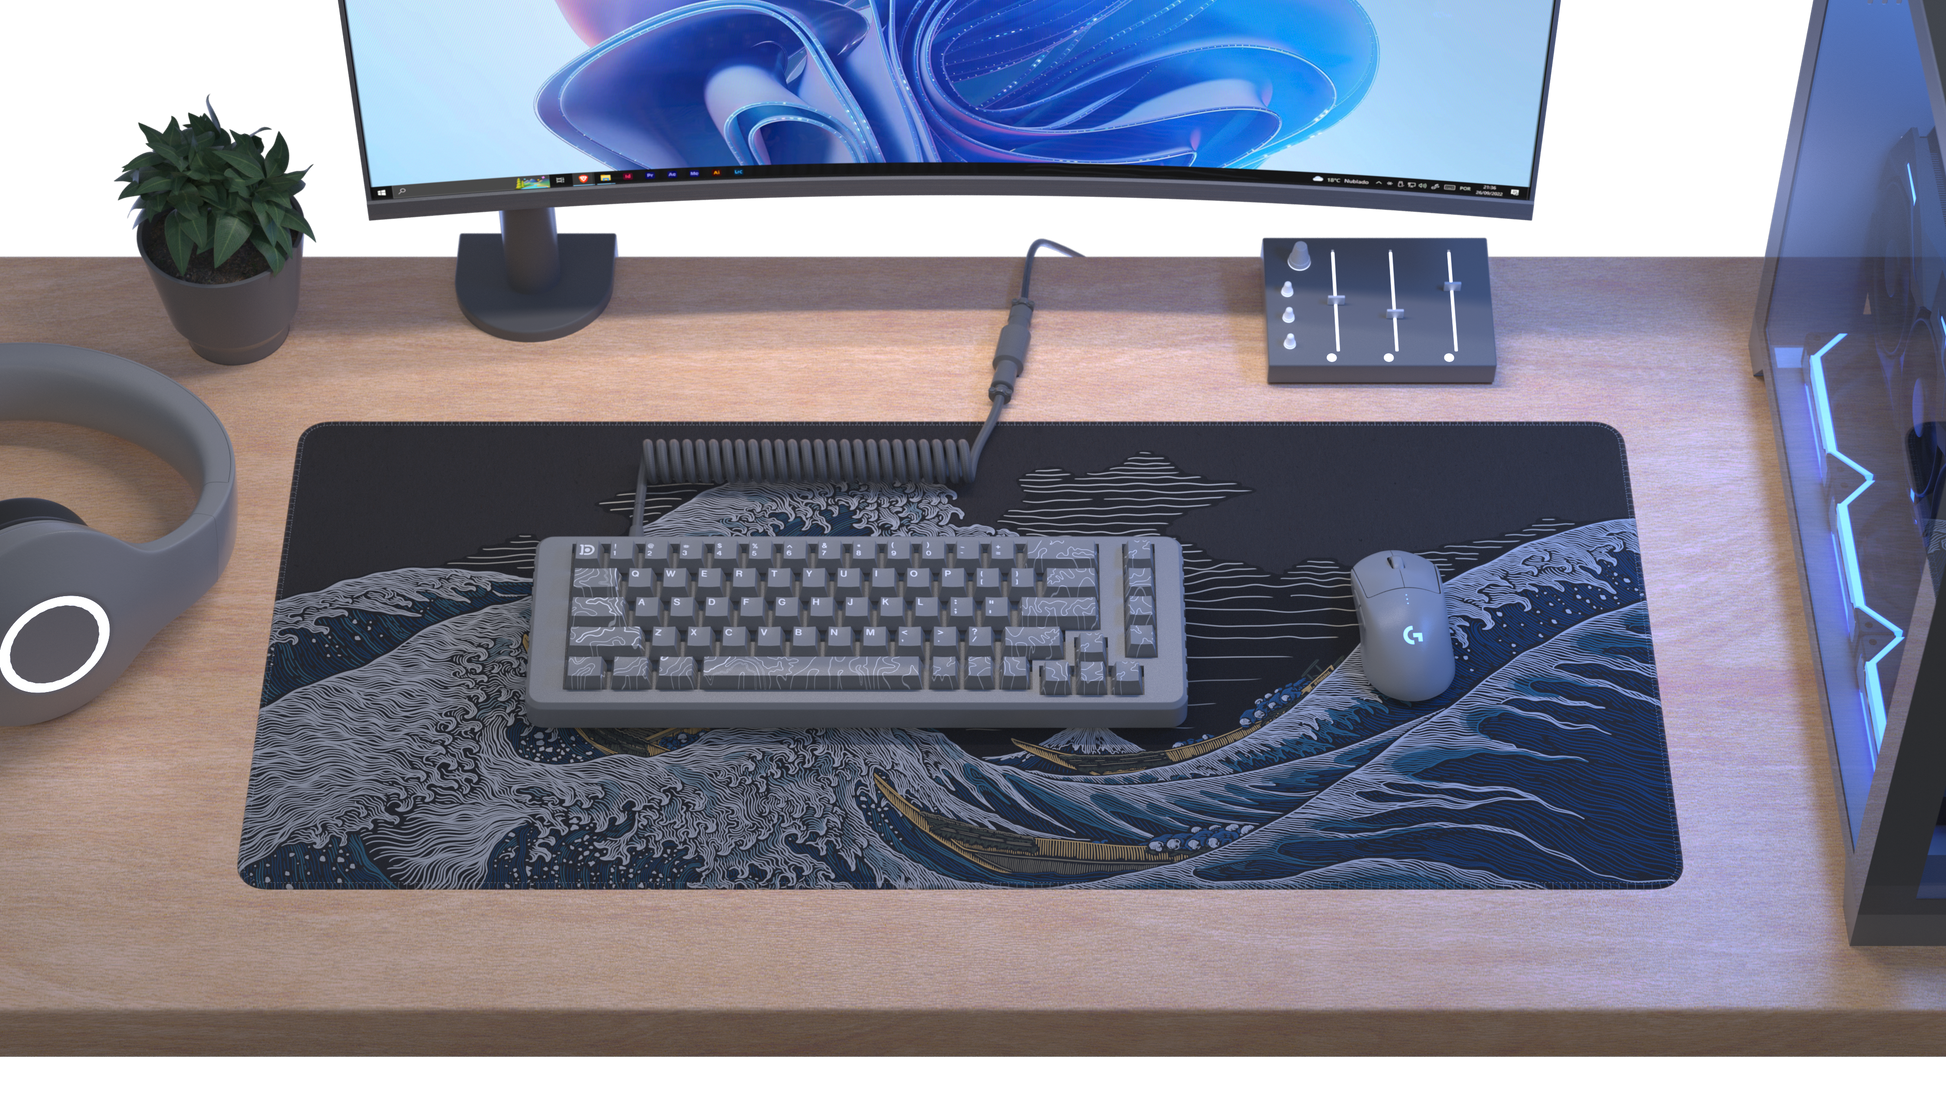 Big Waves Art Mousepad White Black Desk Mouse Pad Computer Keyboard  Finearts Mat